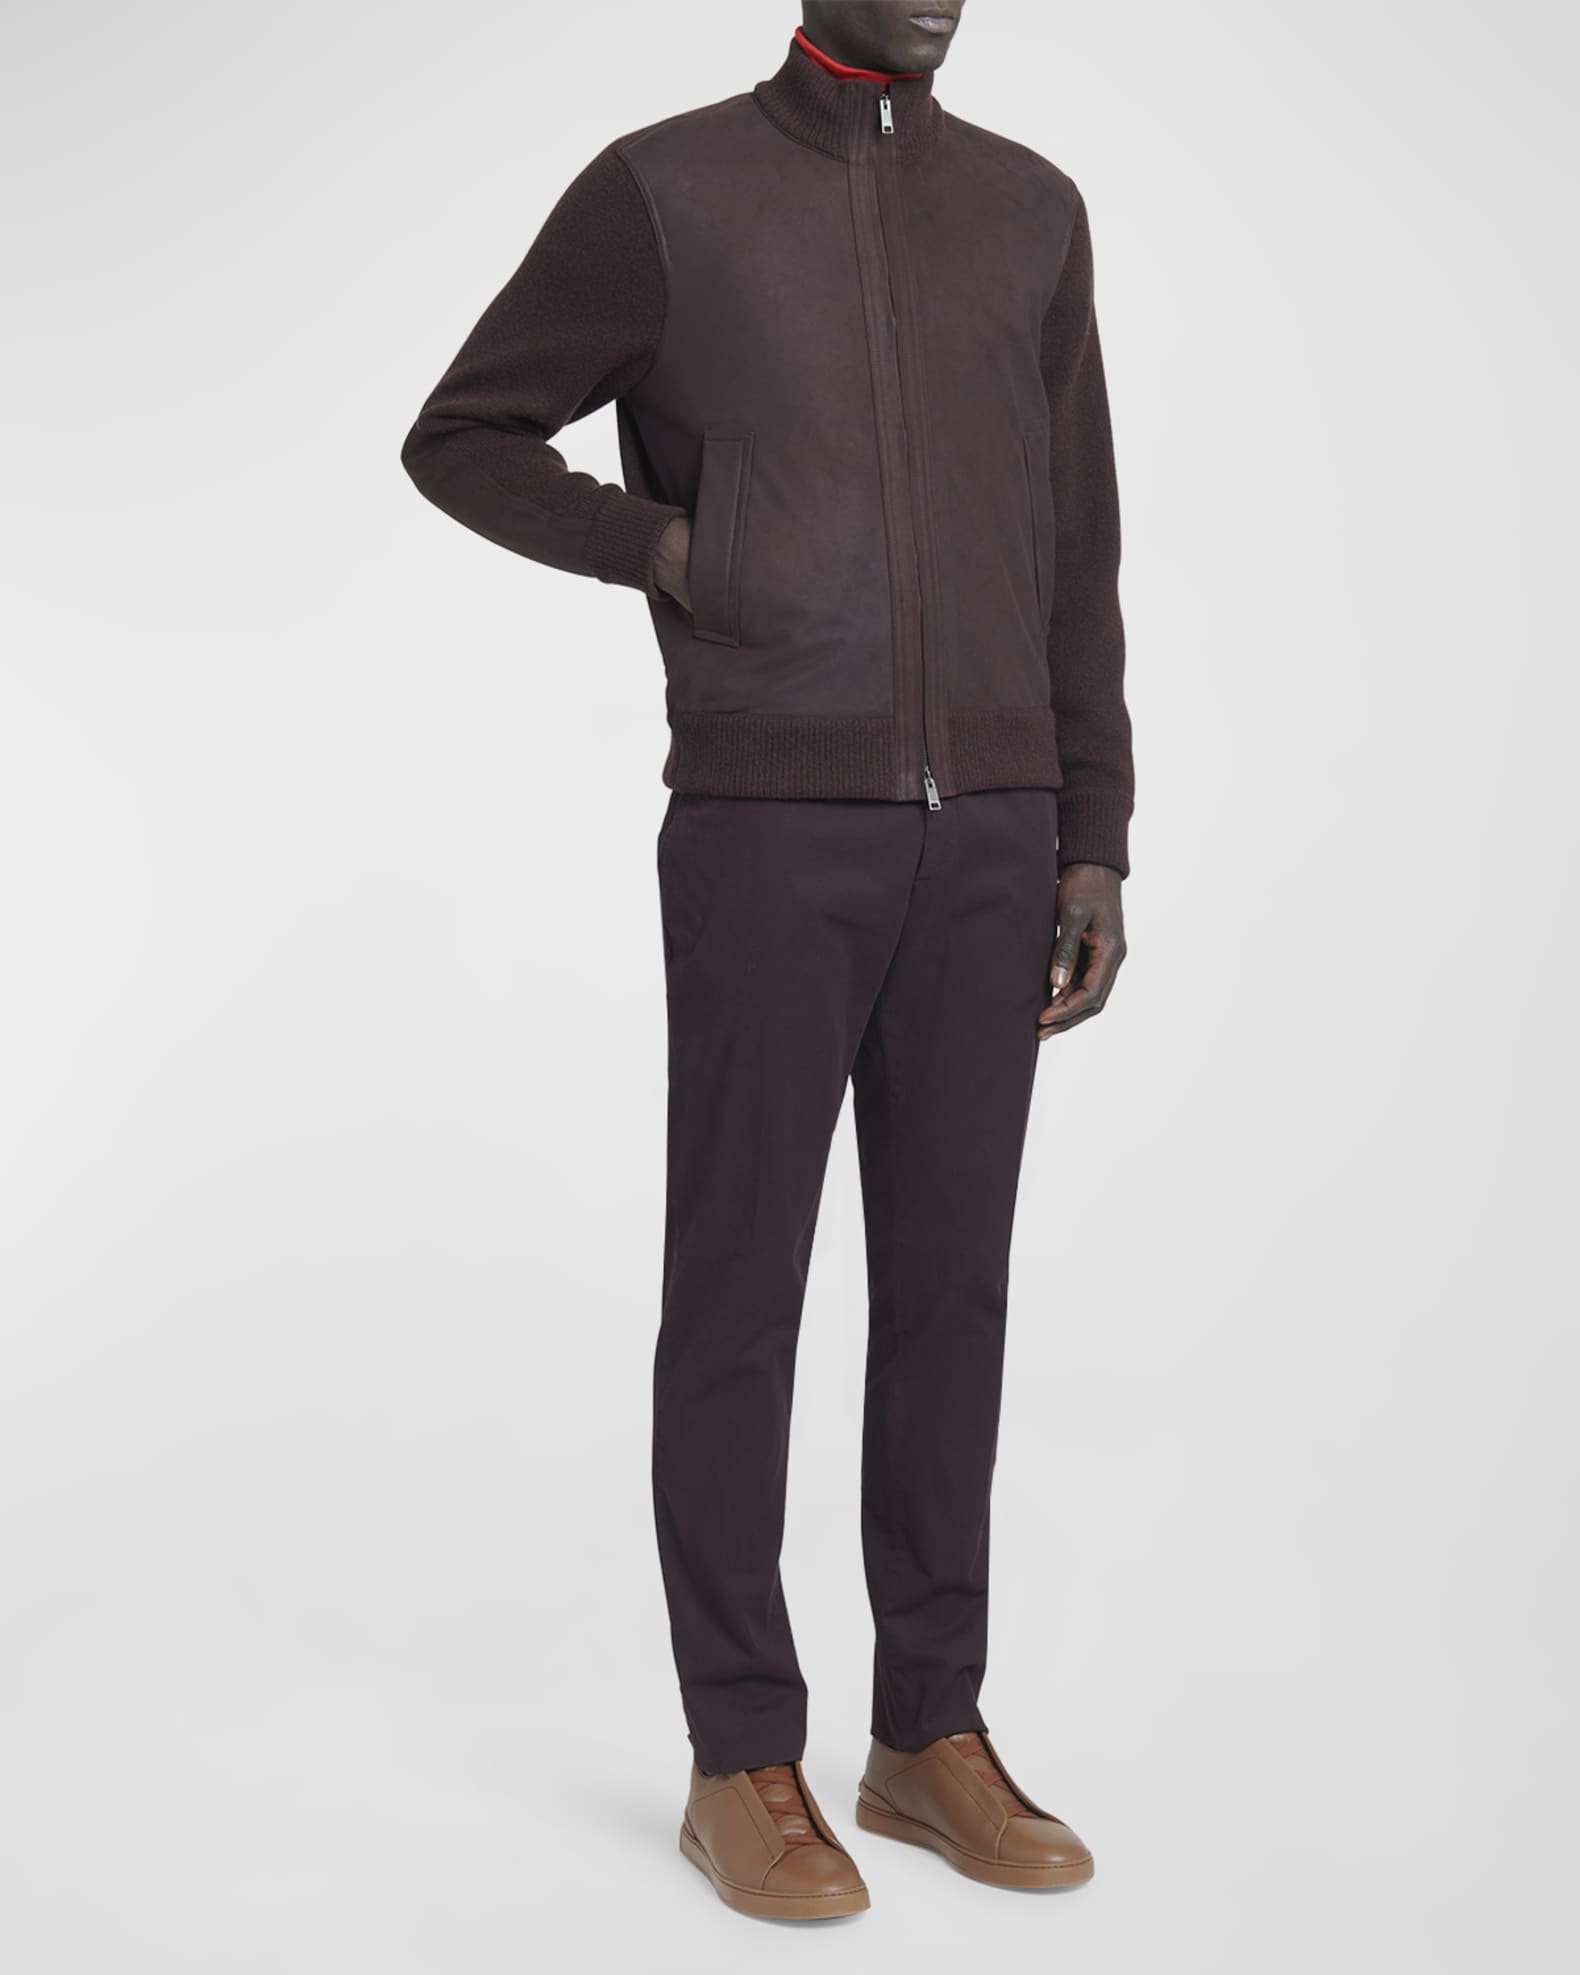 ZEGNA Men's Nubuck Leather Knit Blouson Jacket | Neiman Marcus